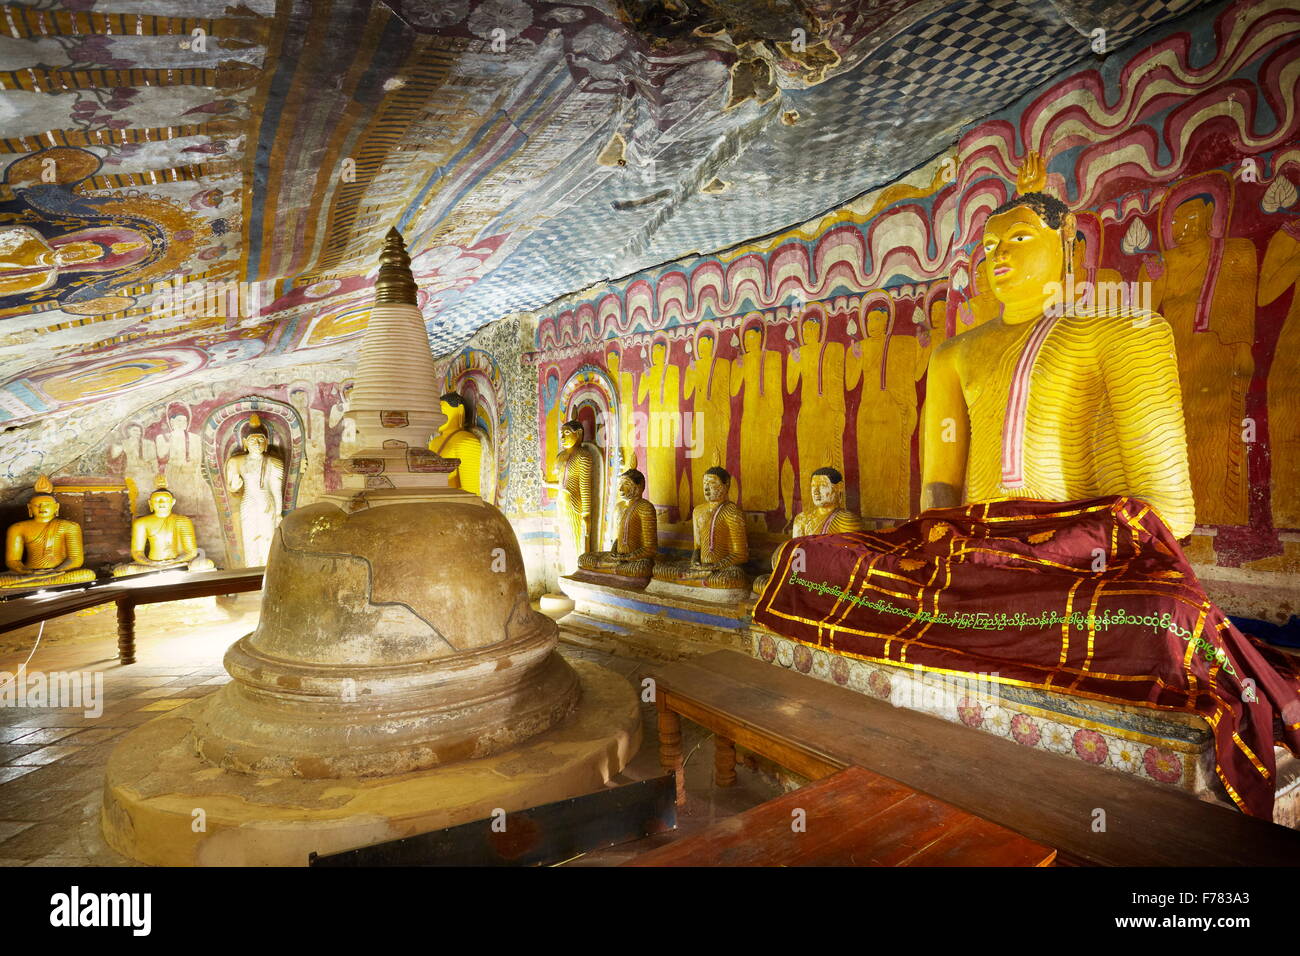 Sri Lanka, Kandy province - interior of Buddhist Cave Temple Dambulla, UNESCO World Heritage Site Stock Photo